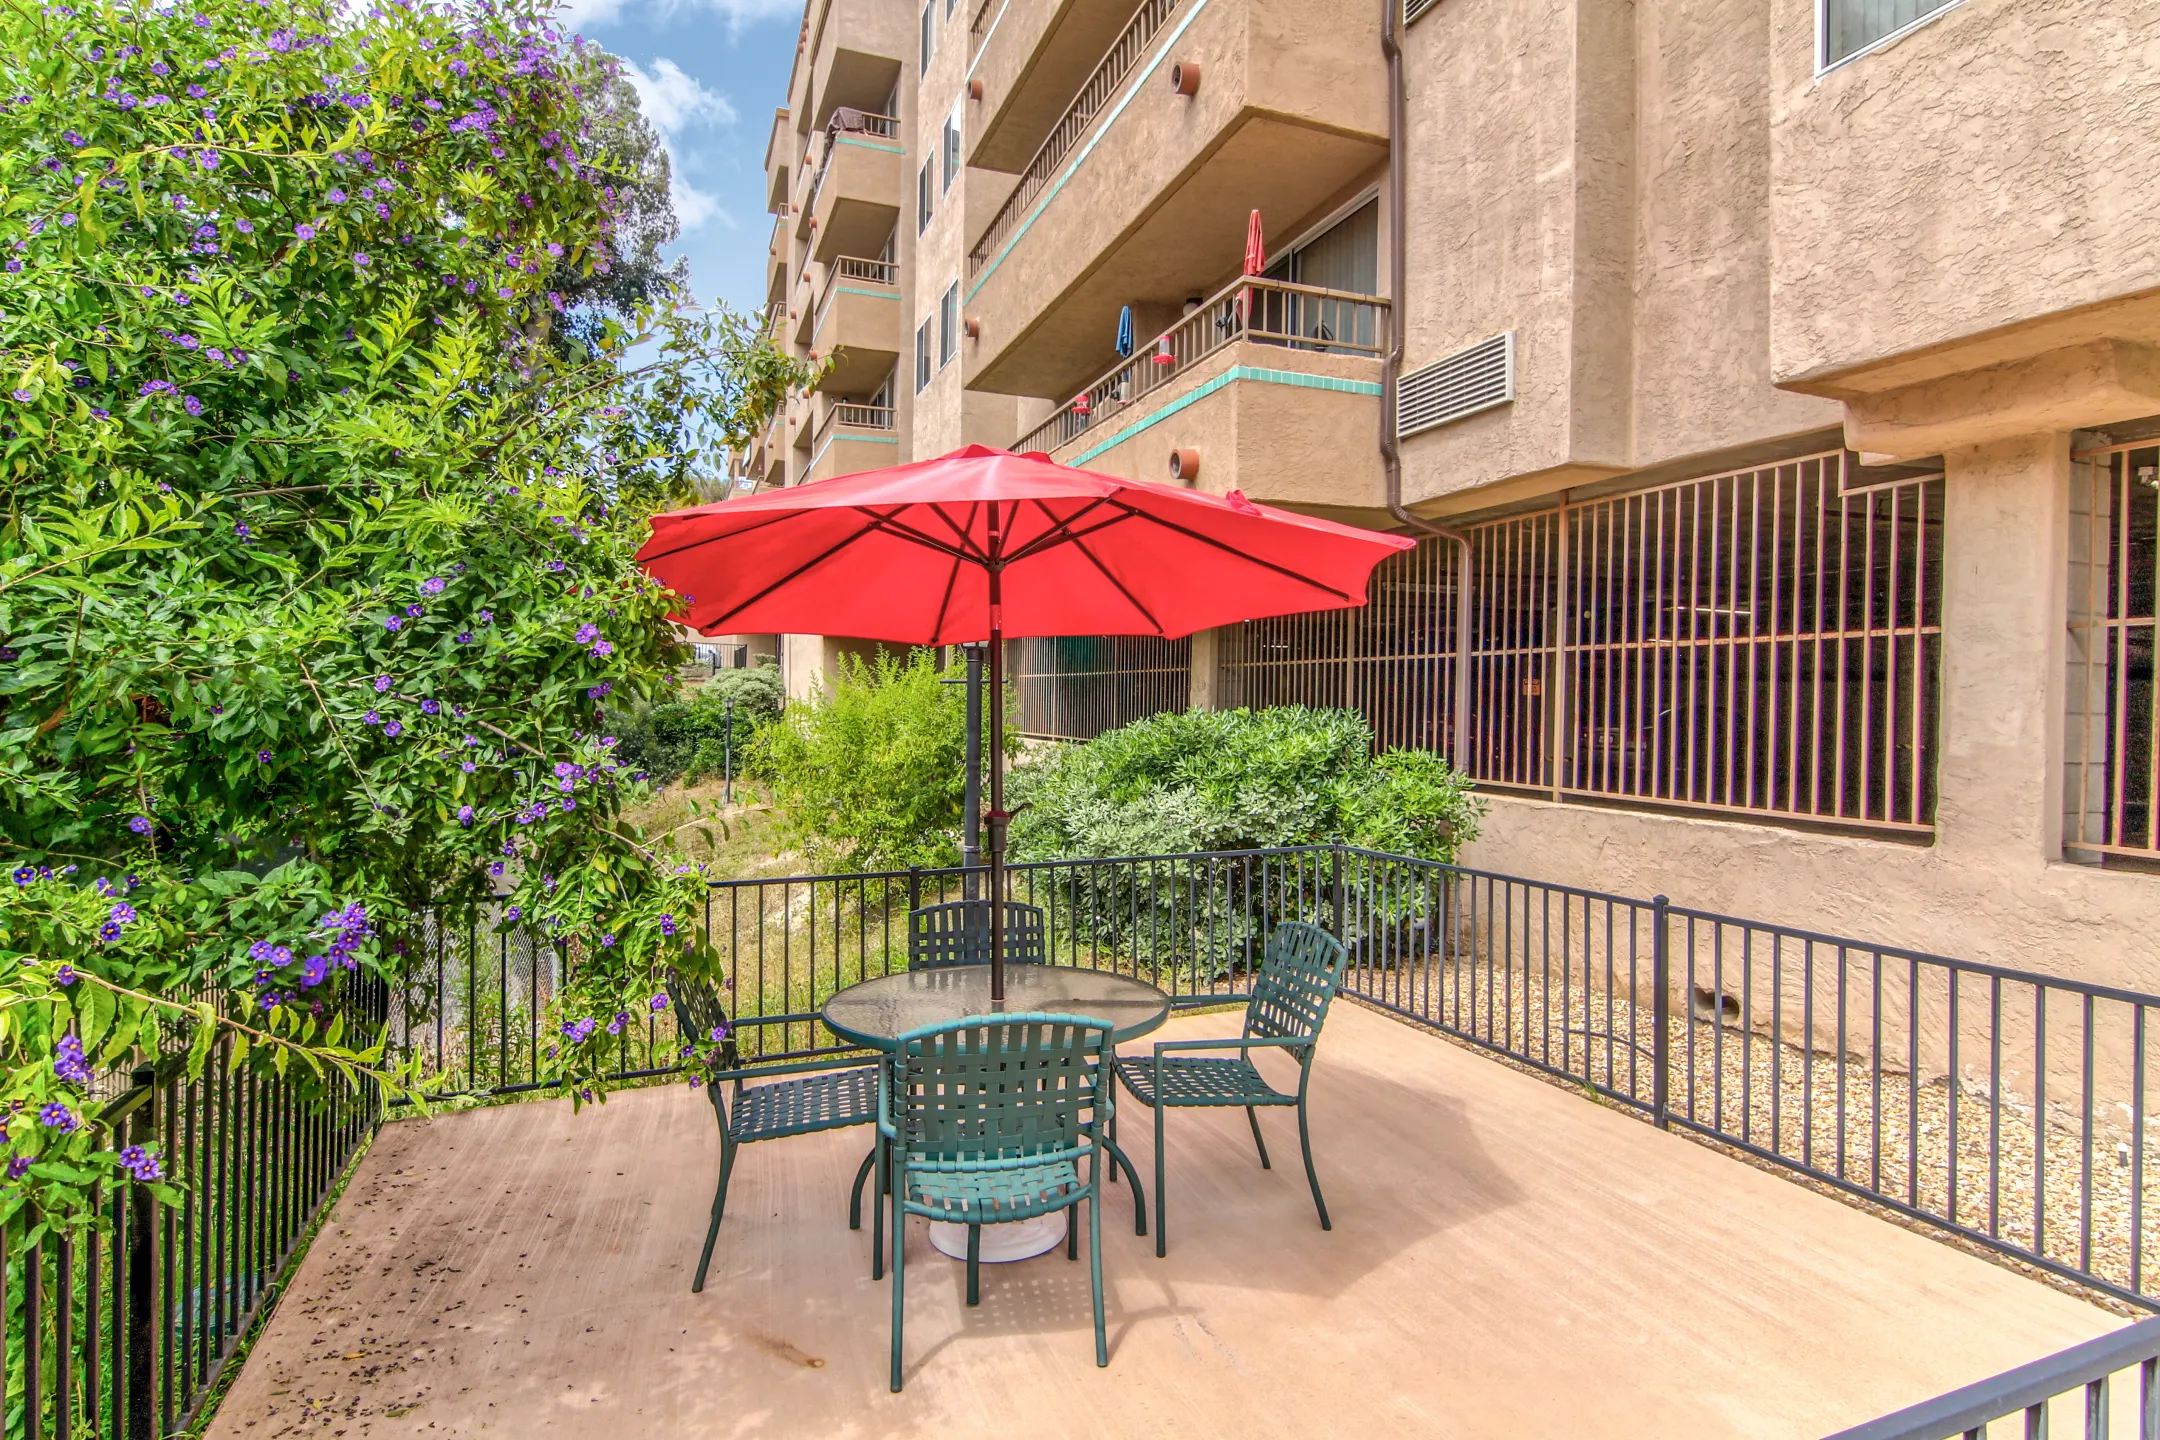 Courtyard - Villa Pacifica Senior Apartments - San Diego, CA